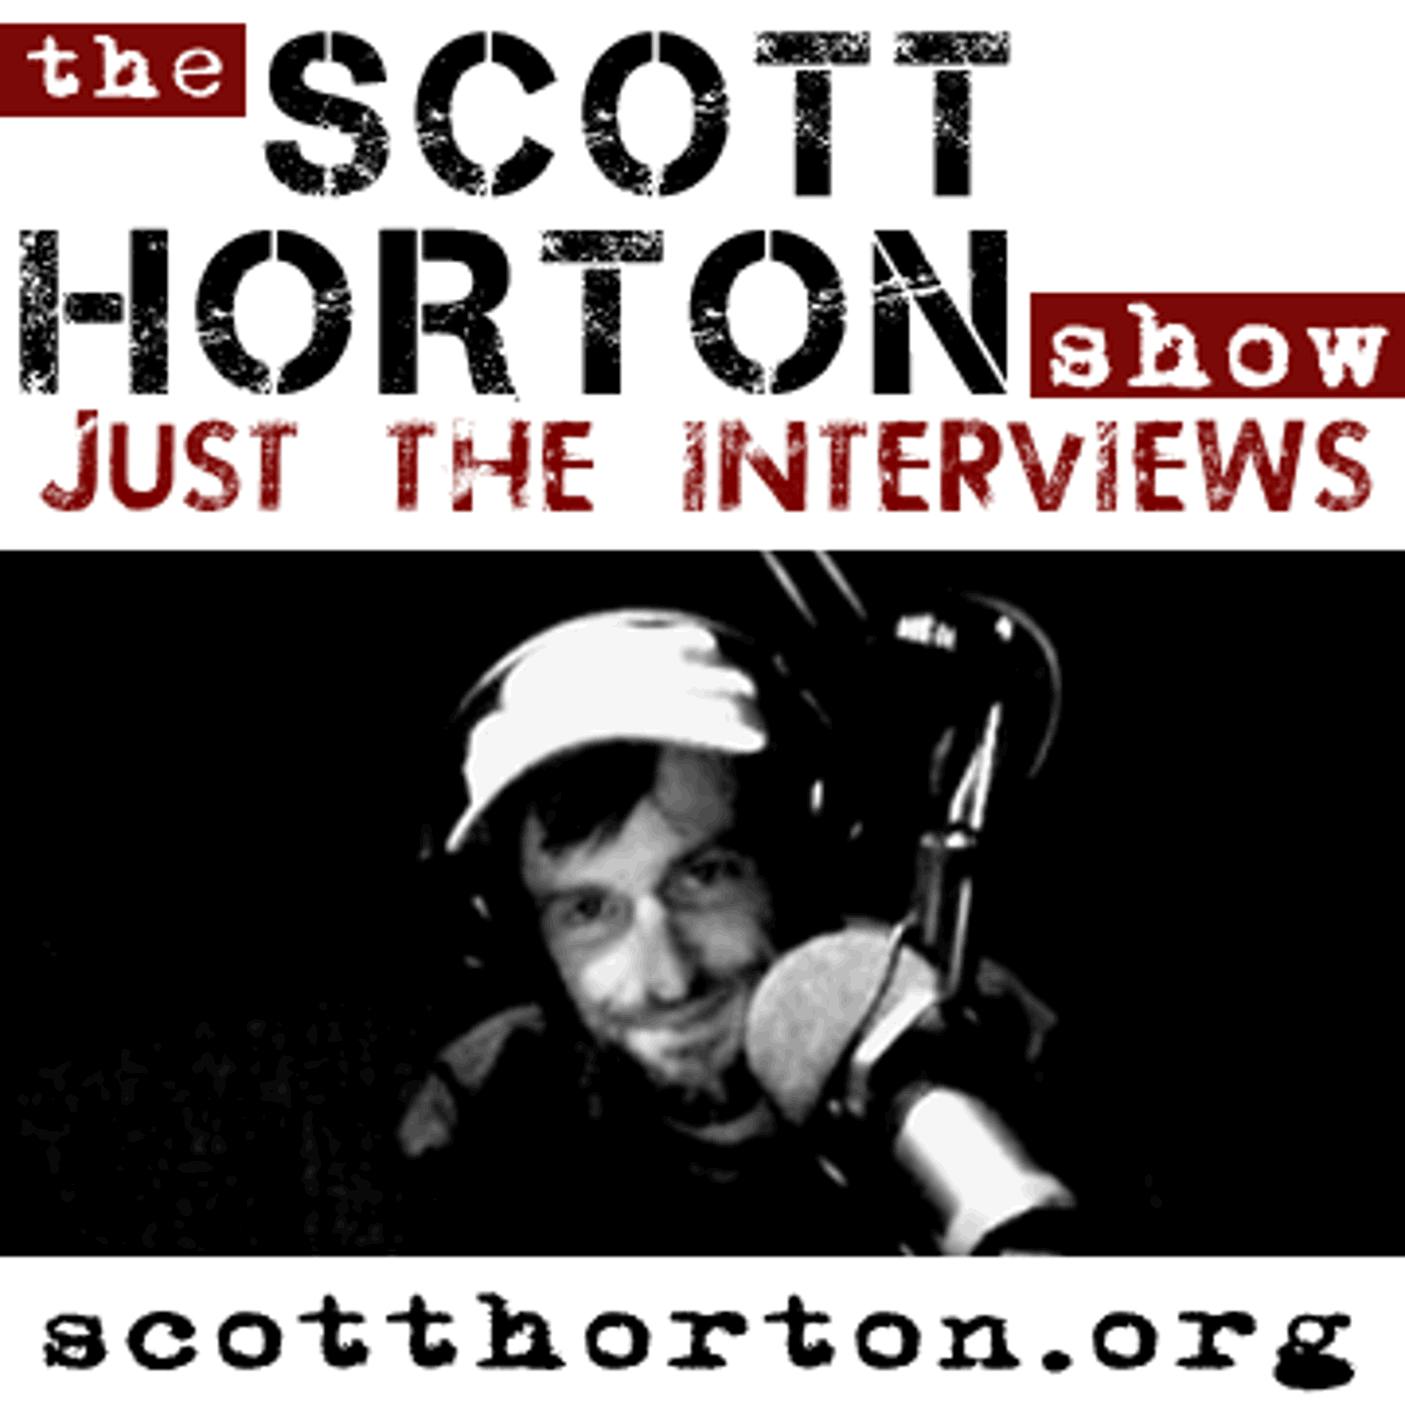 Scott Horton Show - Just the Interviews